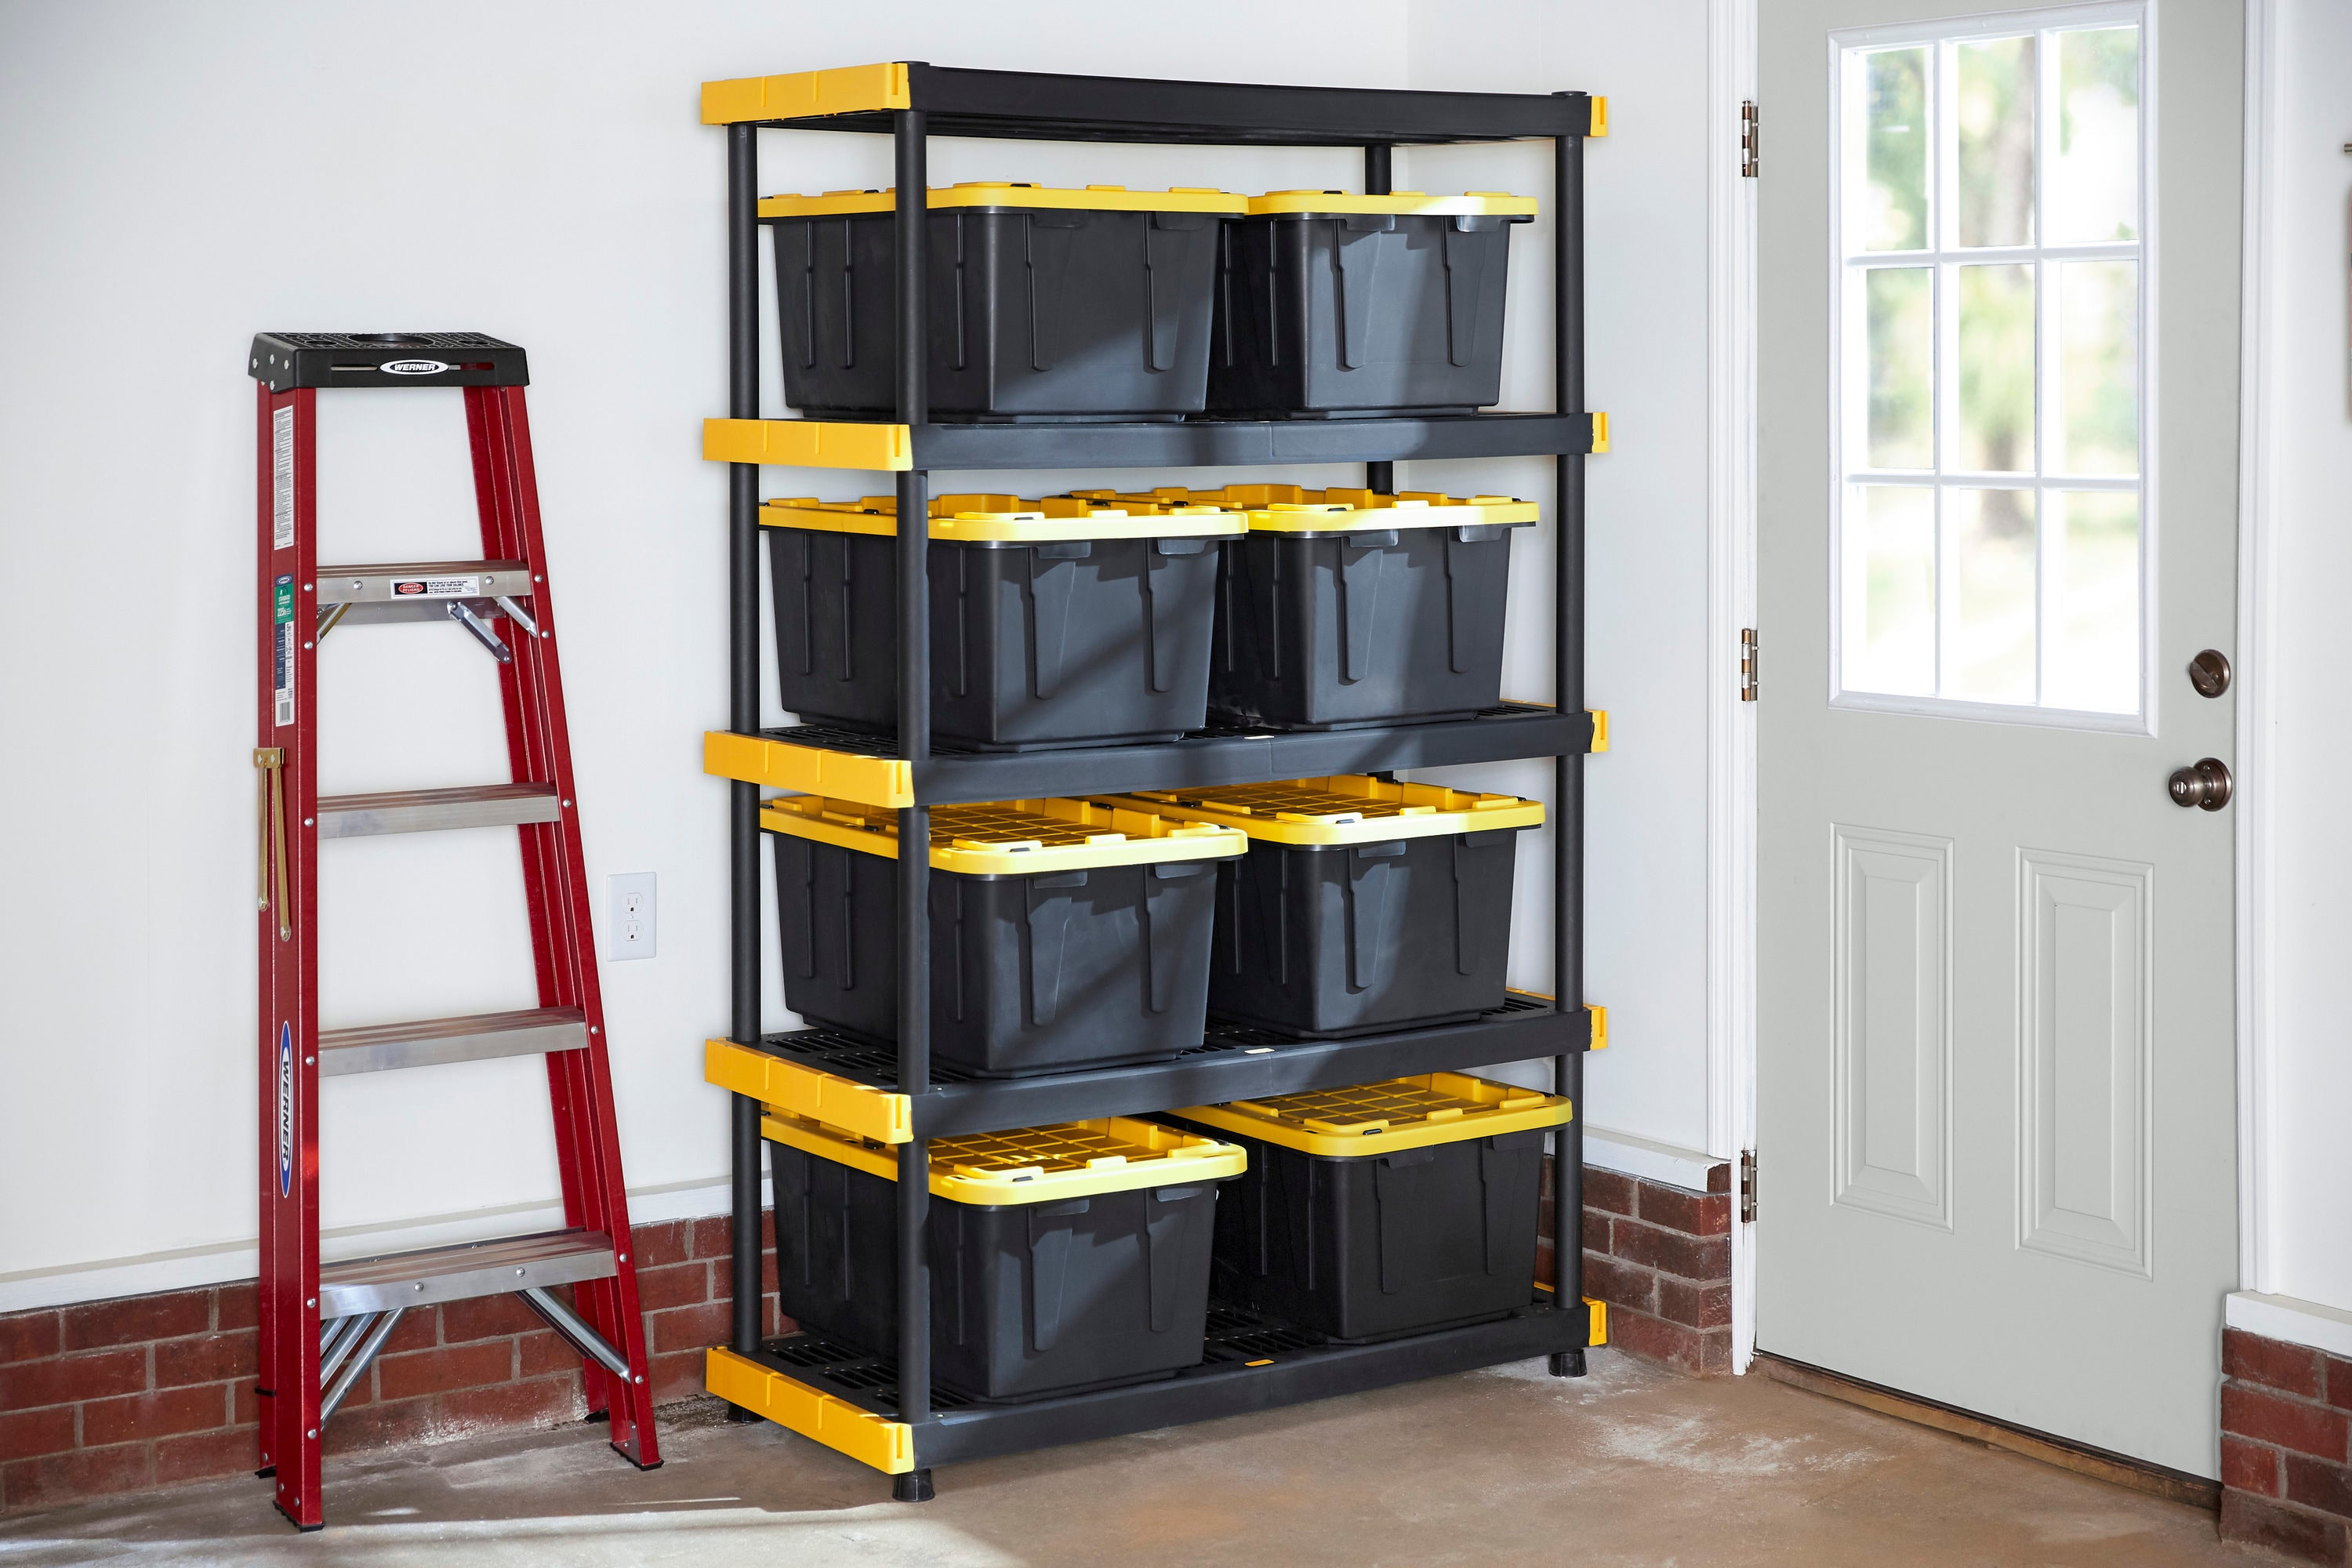 sturdy shelf for Werckmann organizer boxes by LucMeister